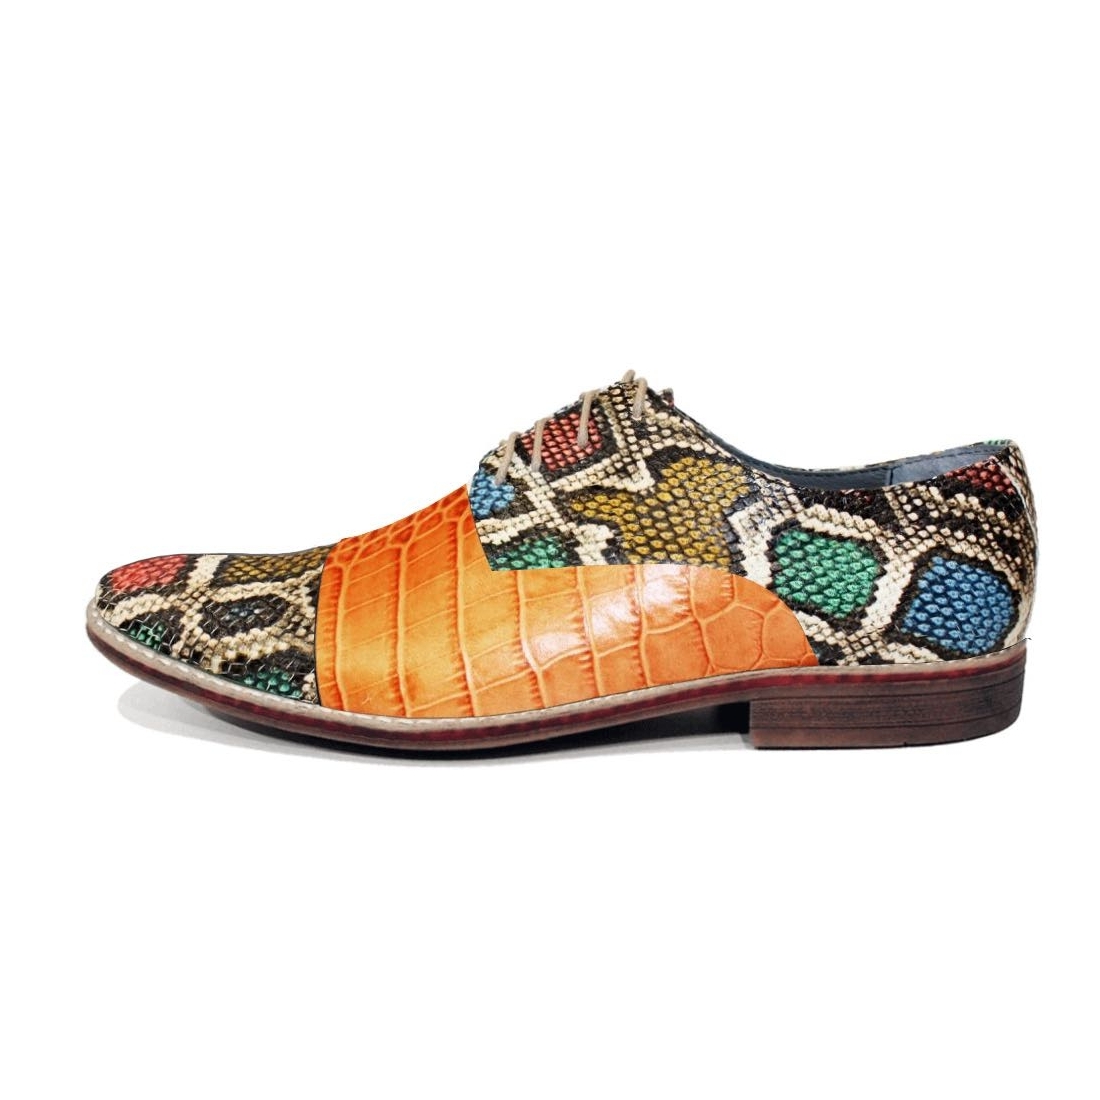 Modello Gadello - クラシックシューズ - Handmade Colorful Italian Leather Shoes